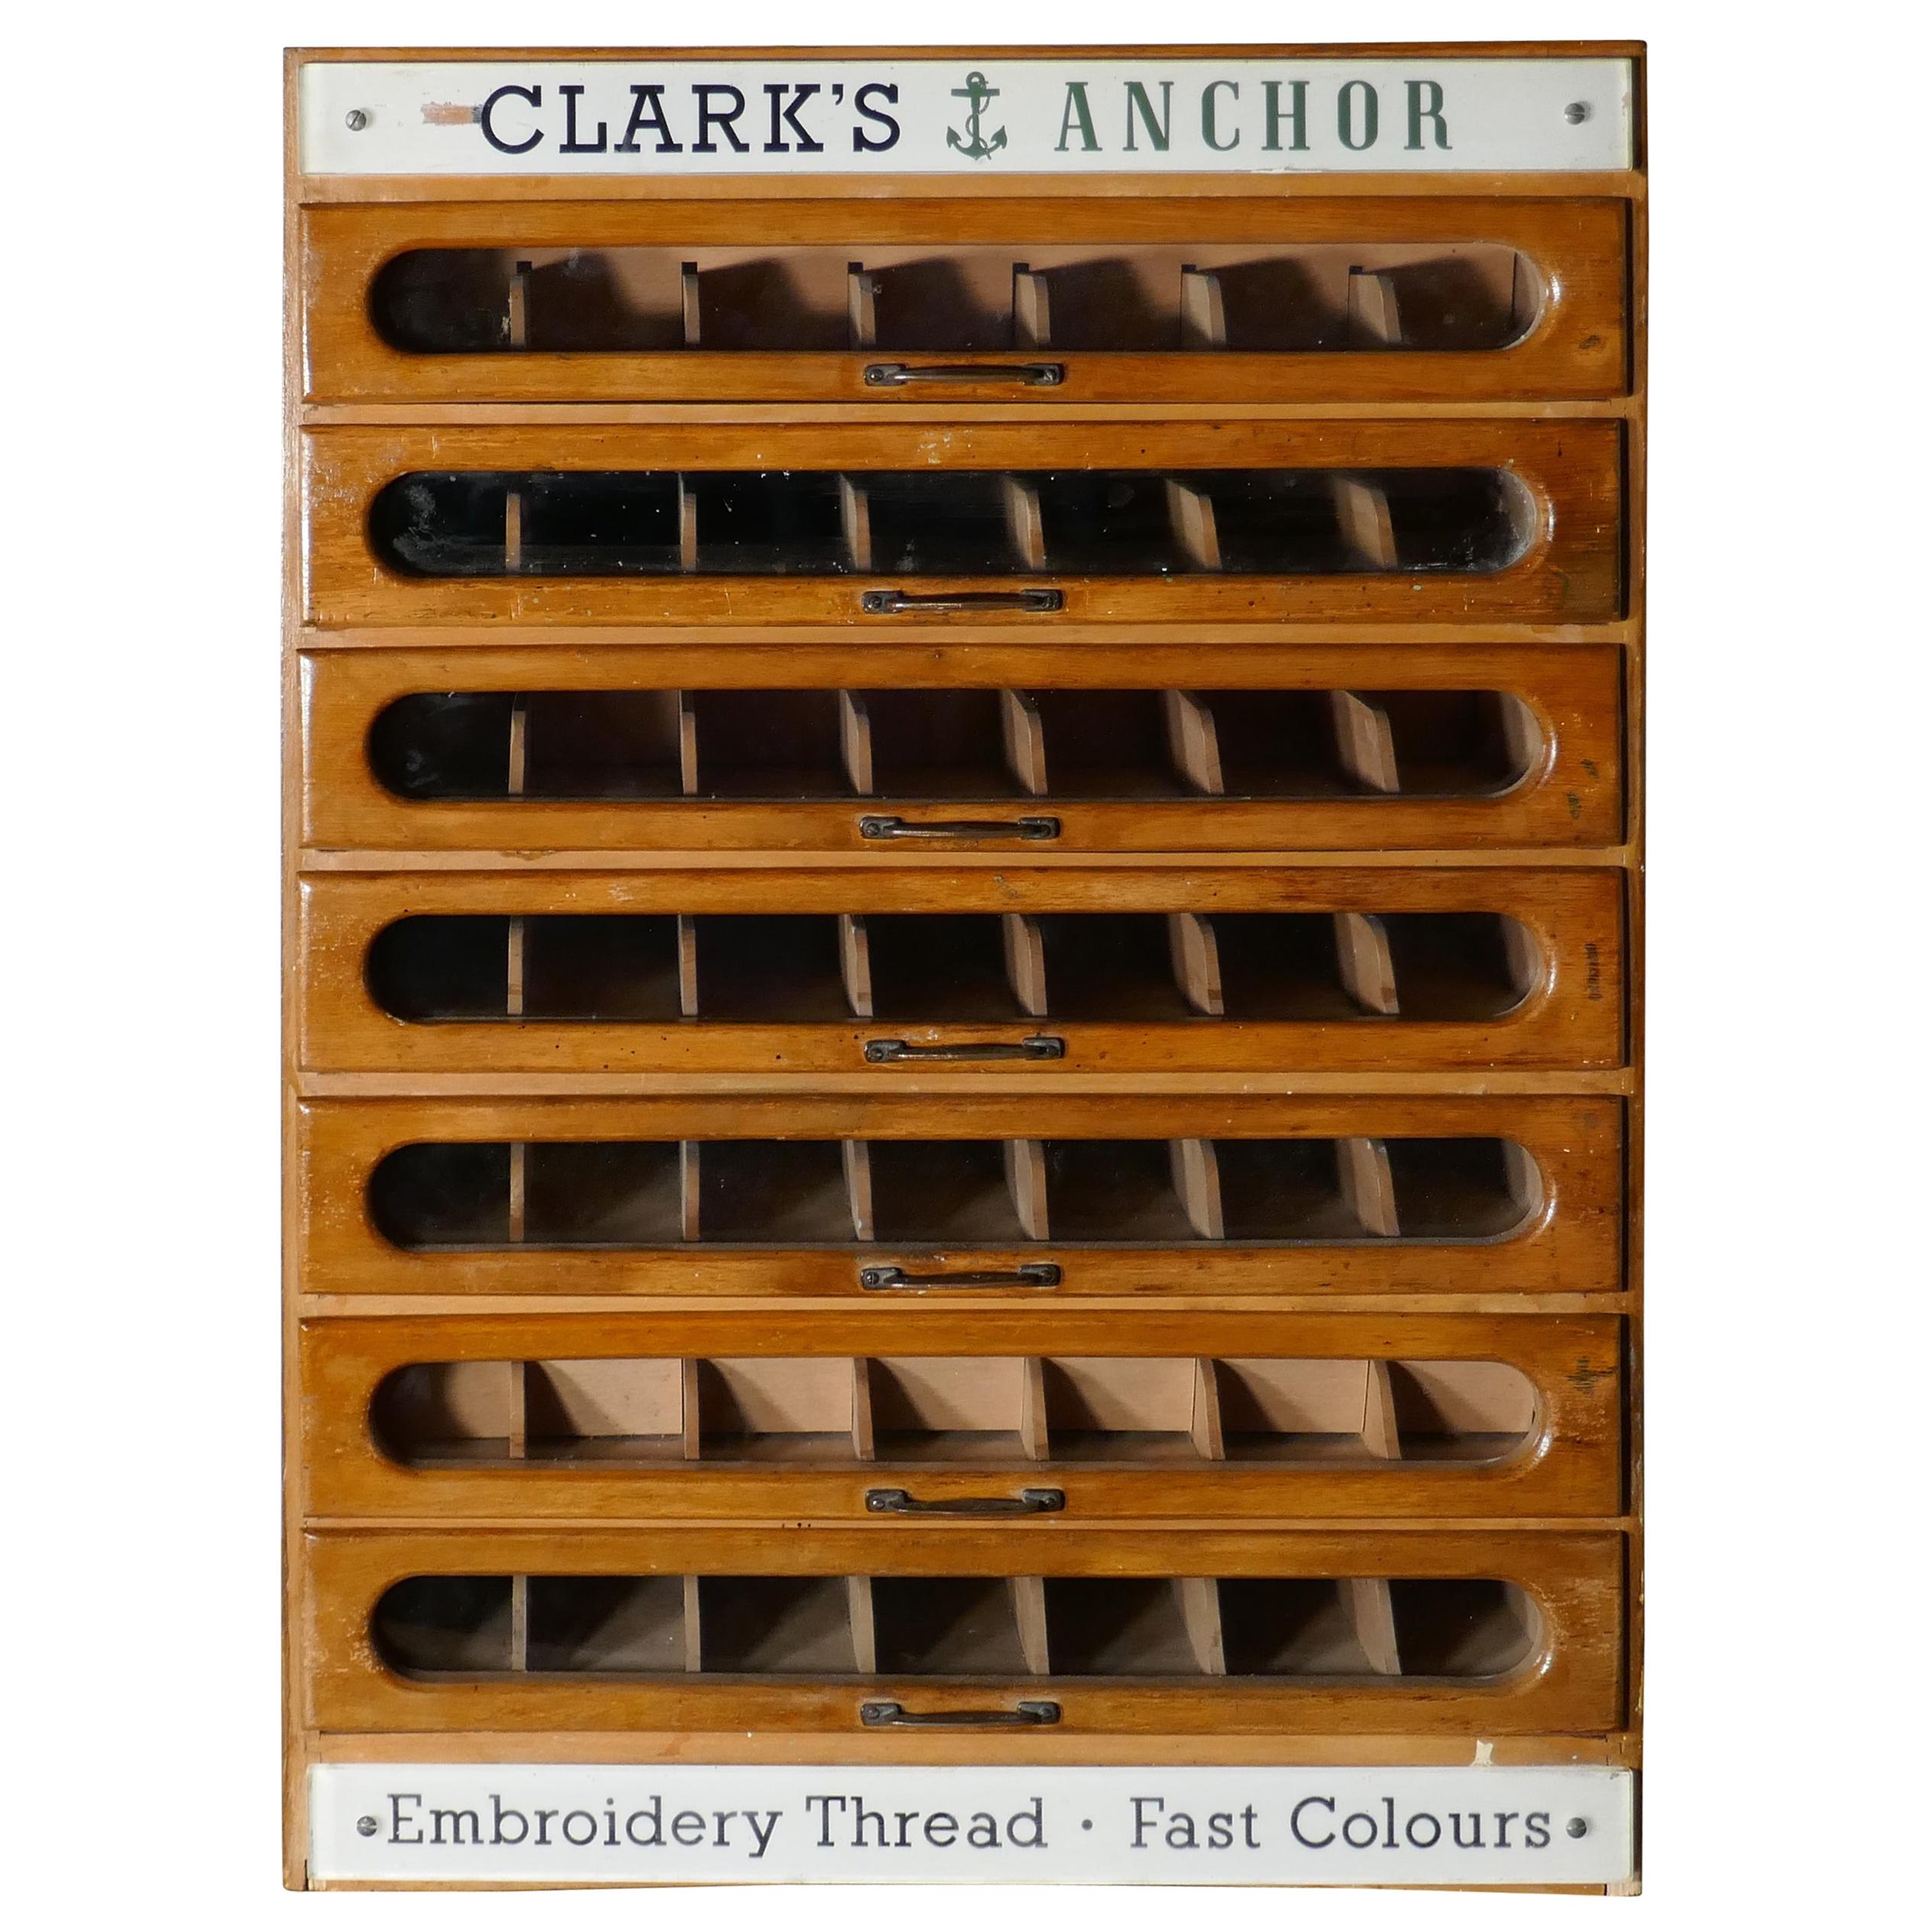 Clark’s Anchor Cotton Haberdashery Advertising Drawers Cabinet